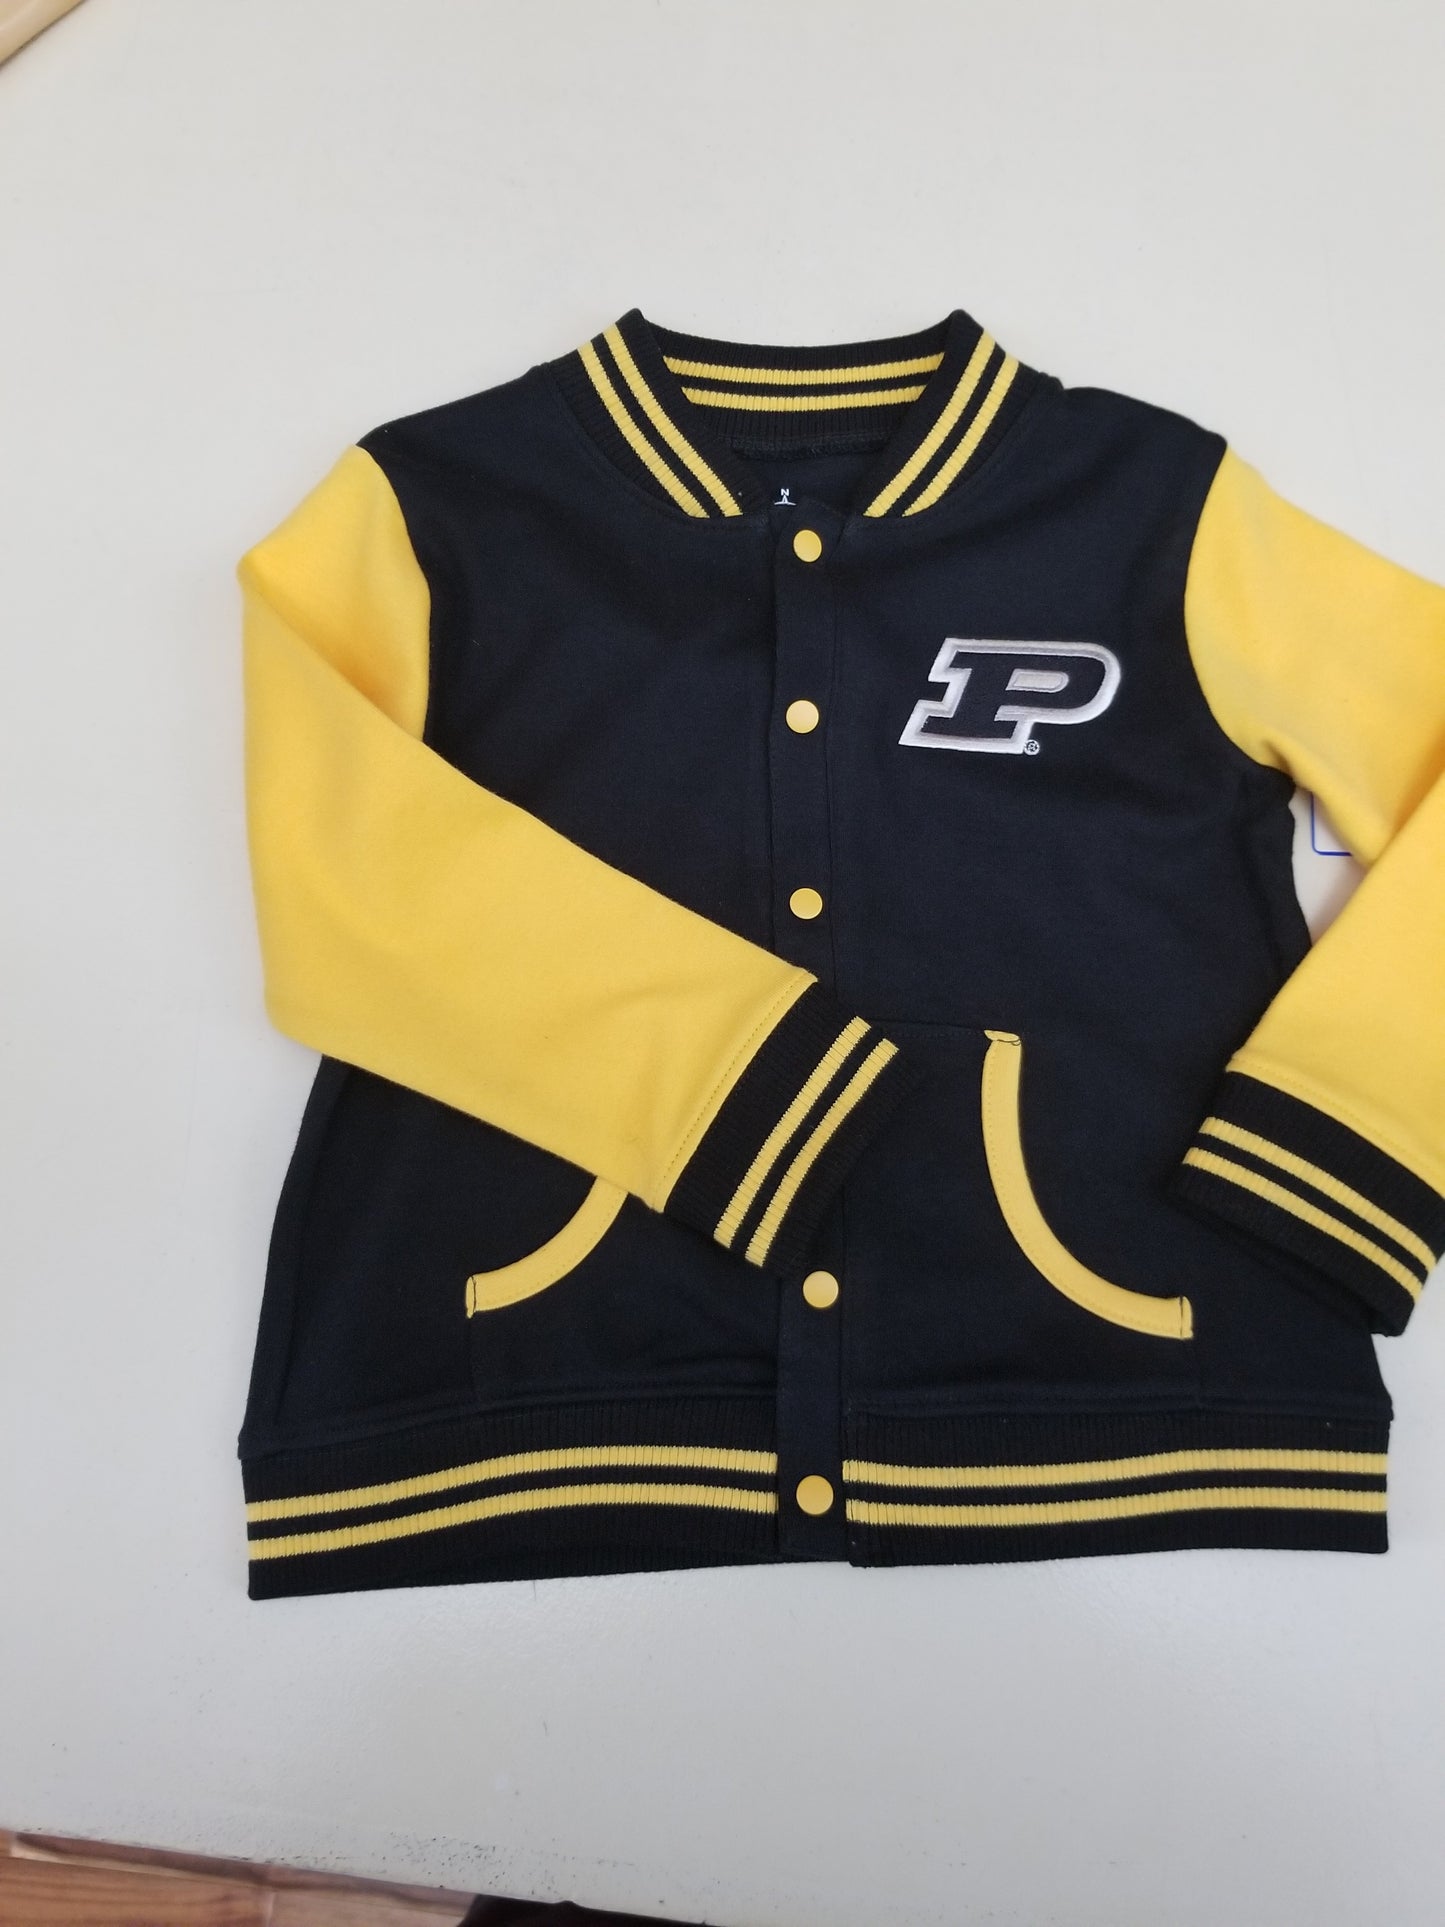 Purdue Personalized Kids Varsity Jacket